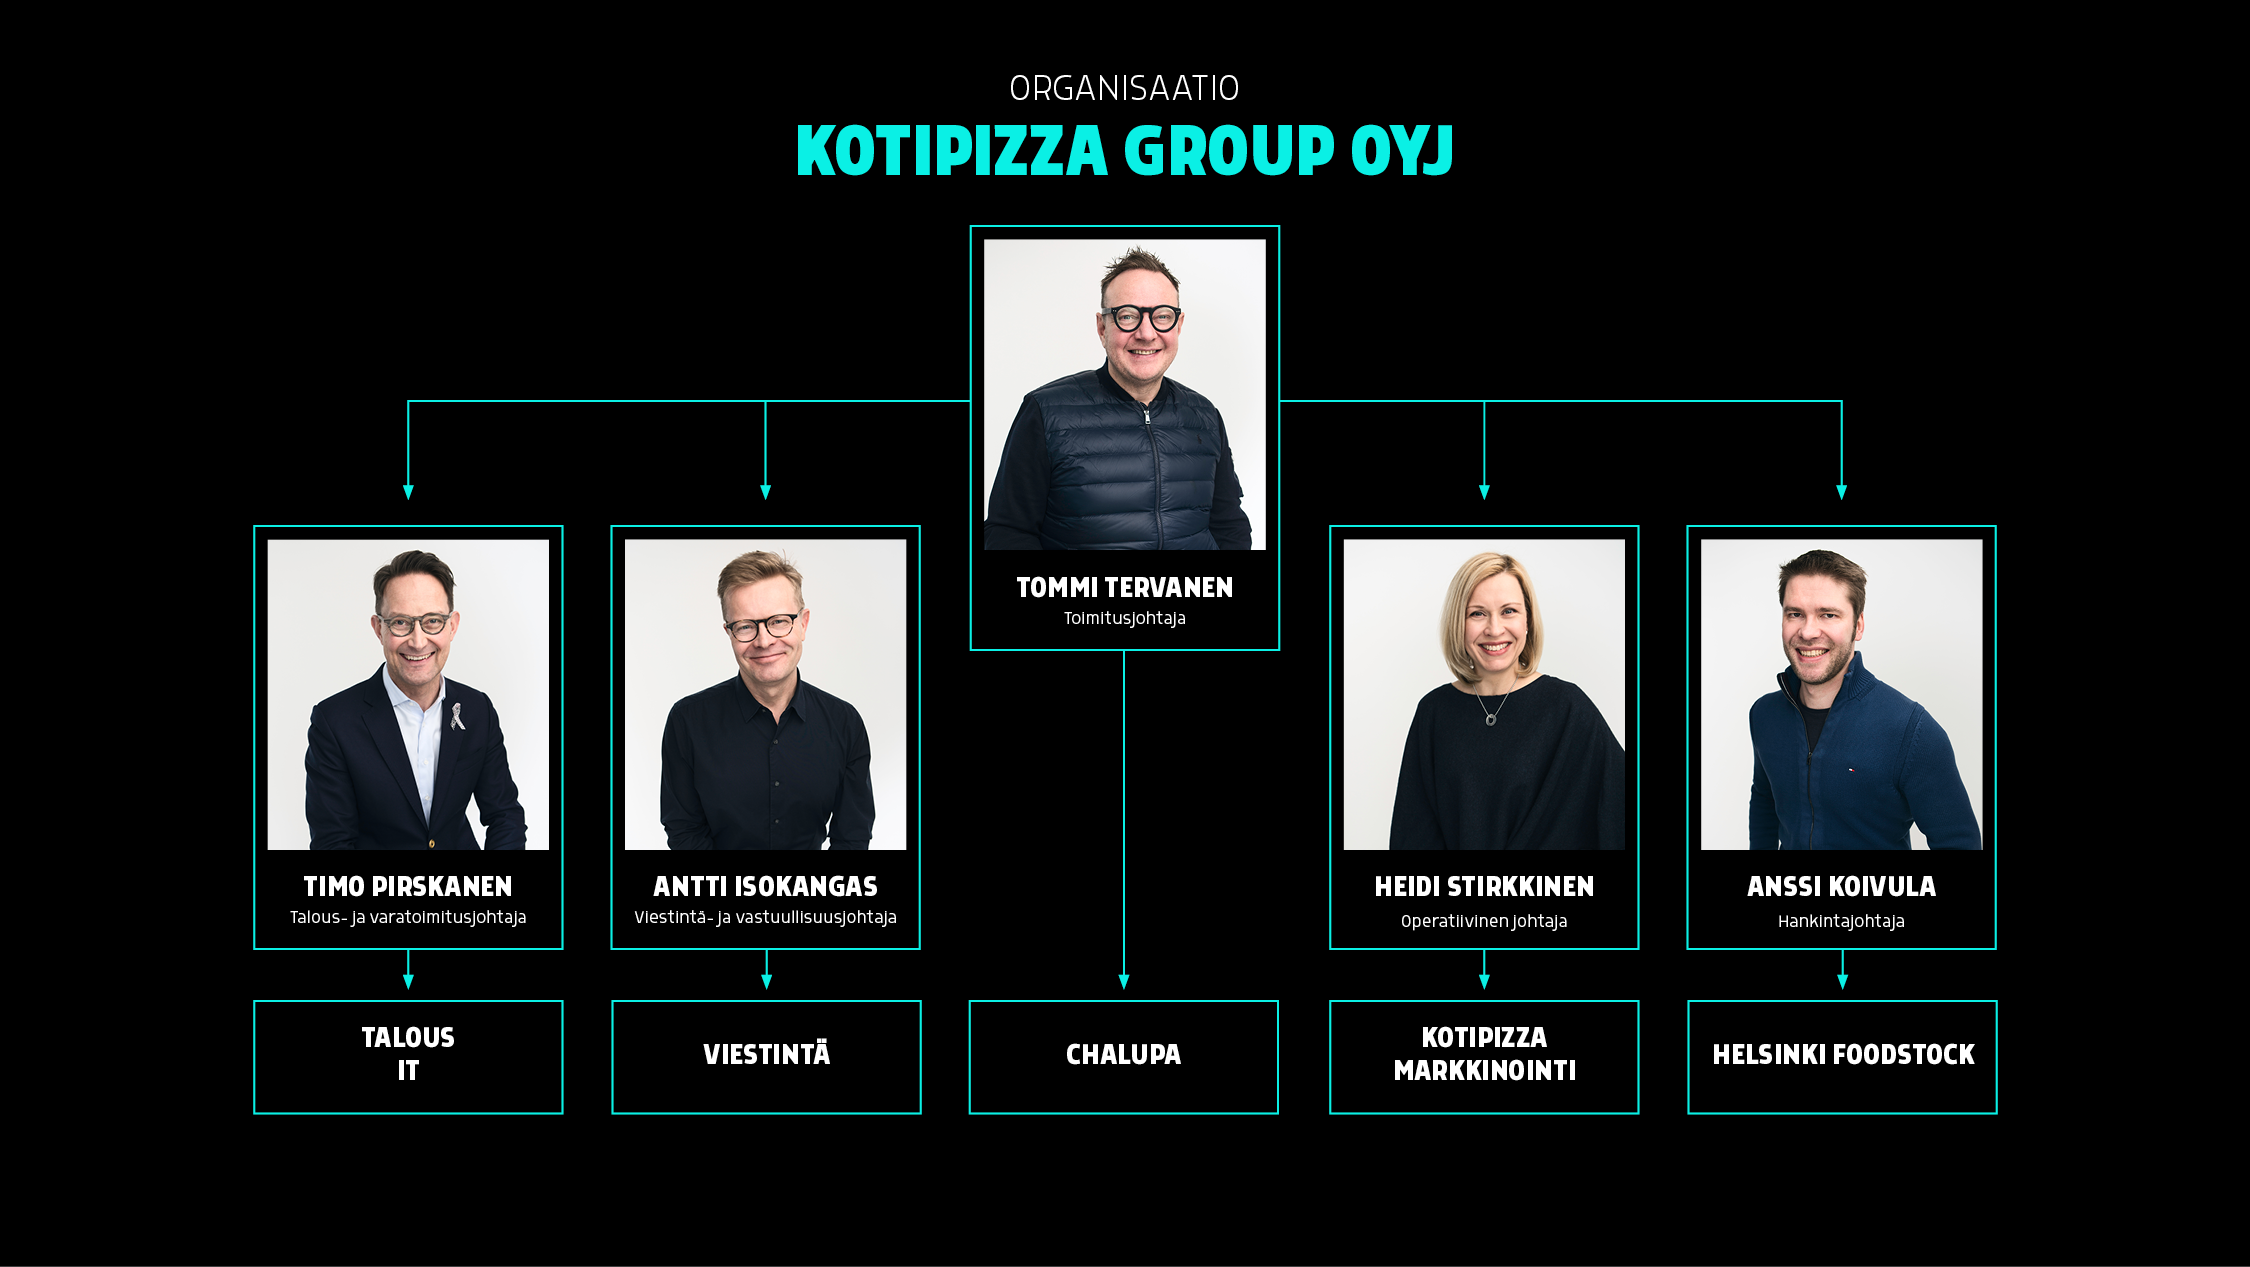 Kotipizza Group Oyj